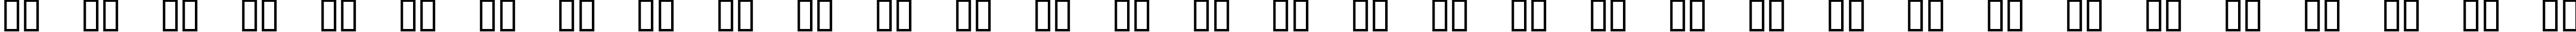 Пример написания русского алфавита шрифтом KR Hockey Dings